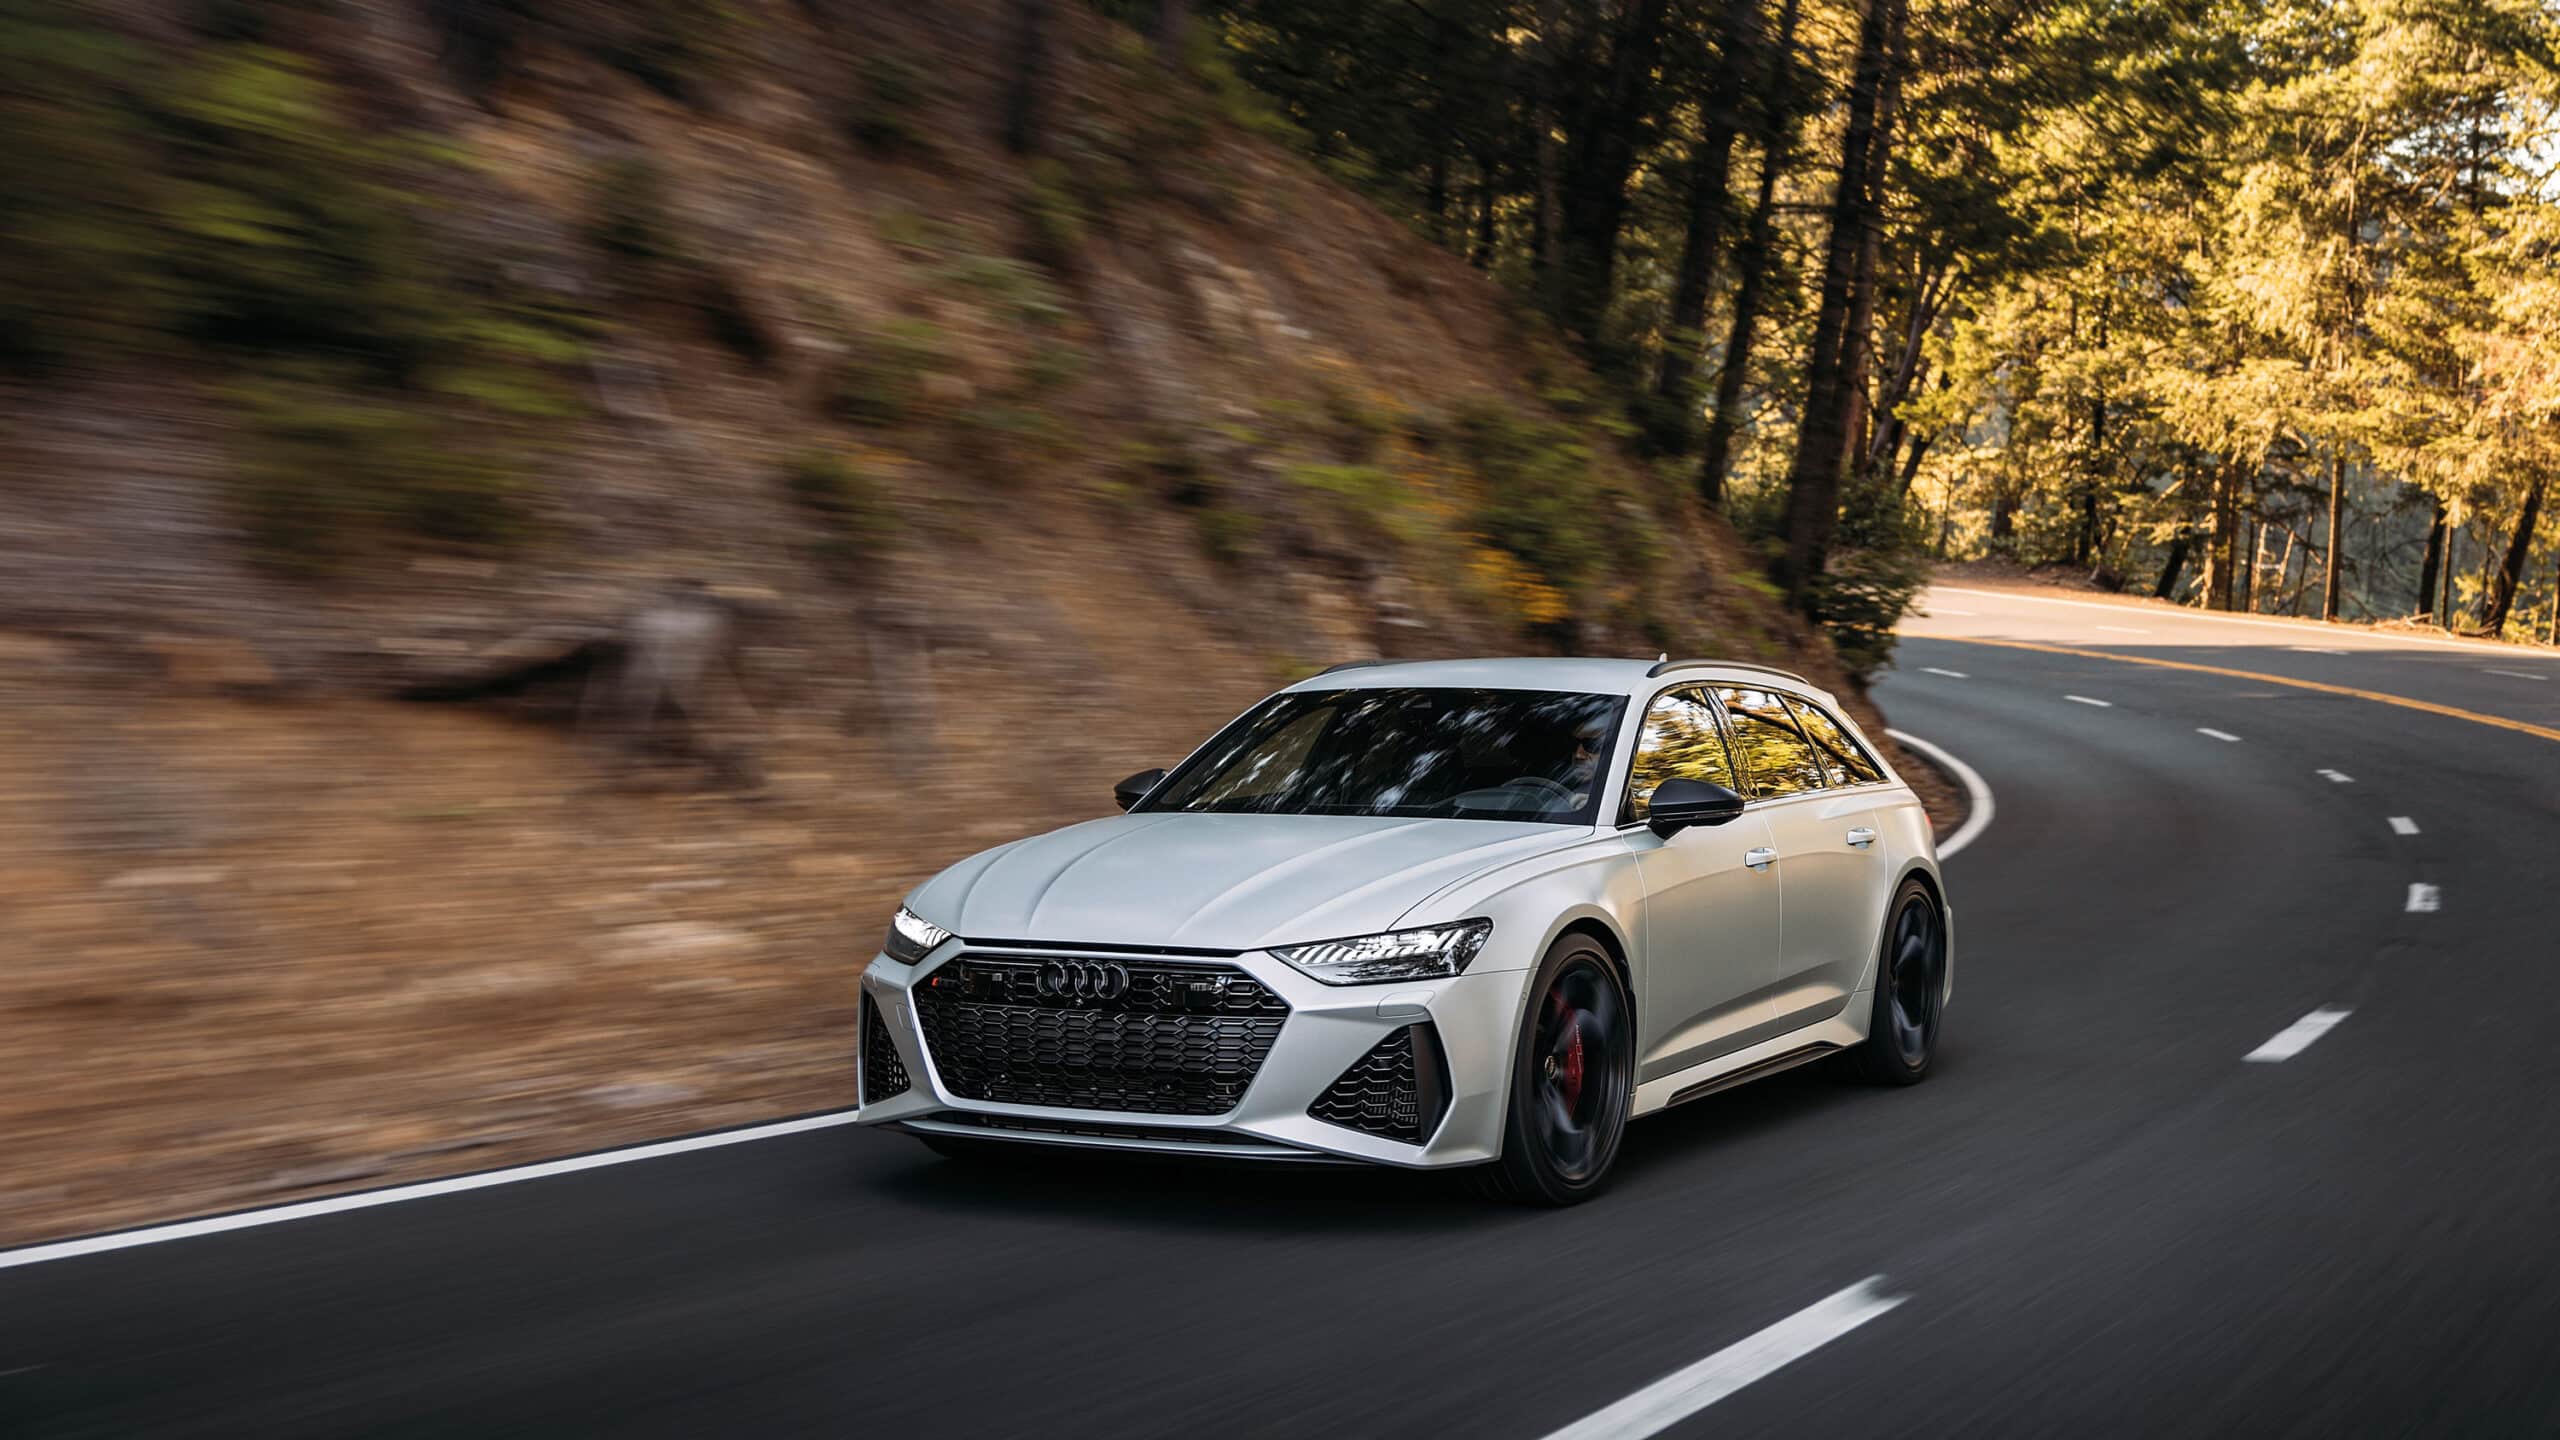 Audi is resurrecting this sports car sedan as a more powerful EV